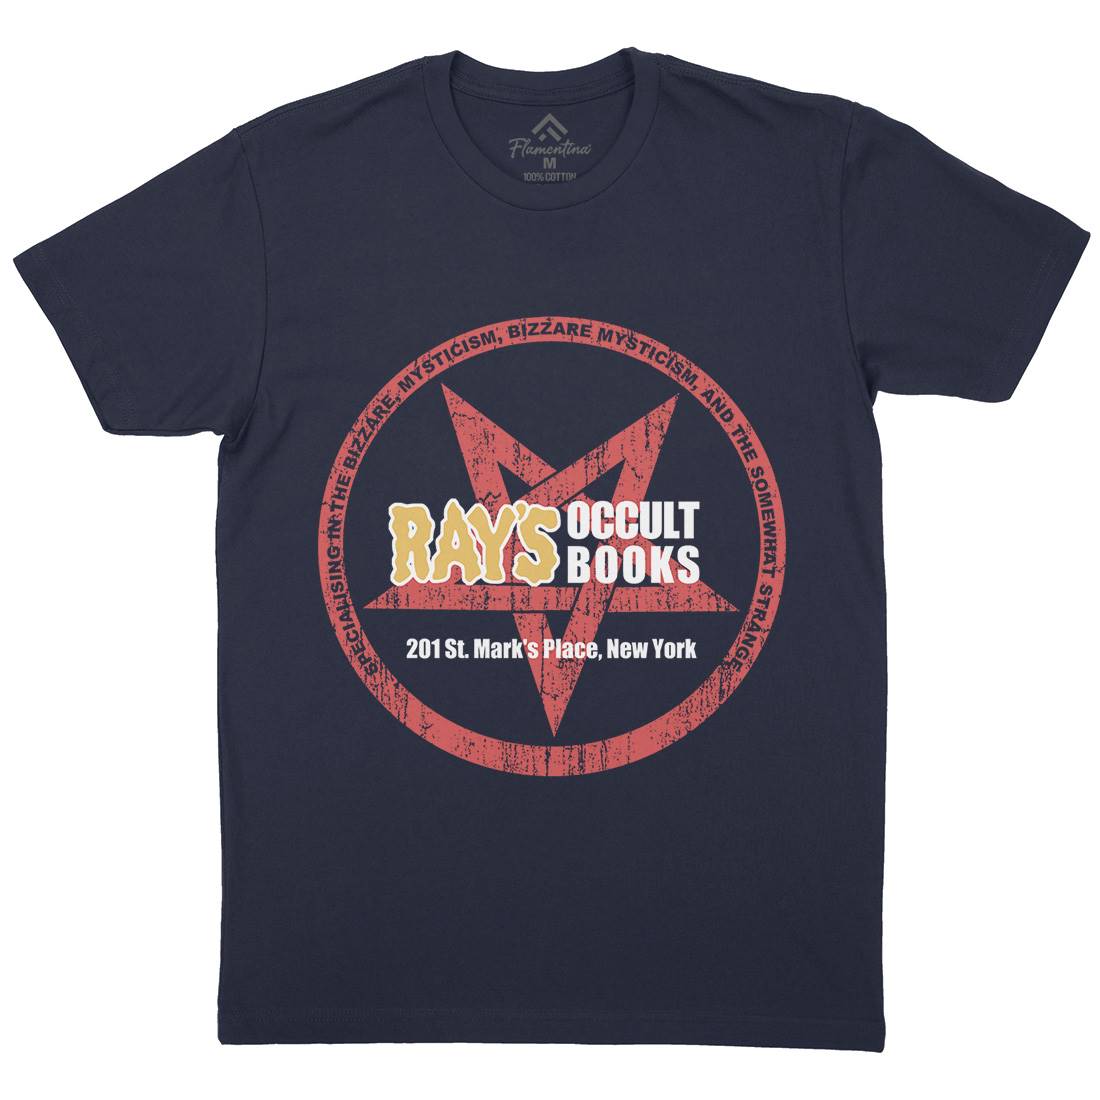 Rays Occult Books Mens Crew Neck T-Shirt Horror D395